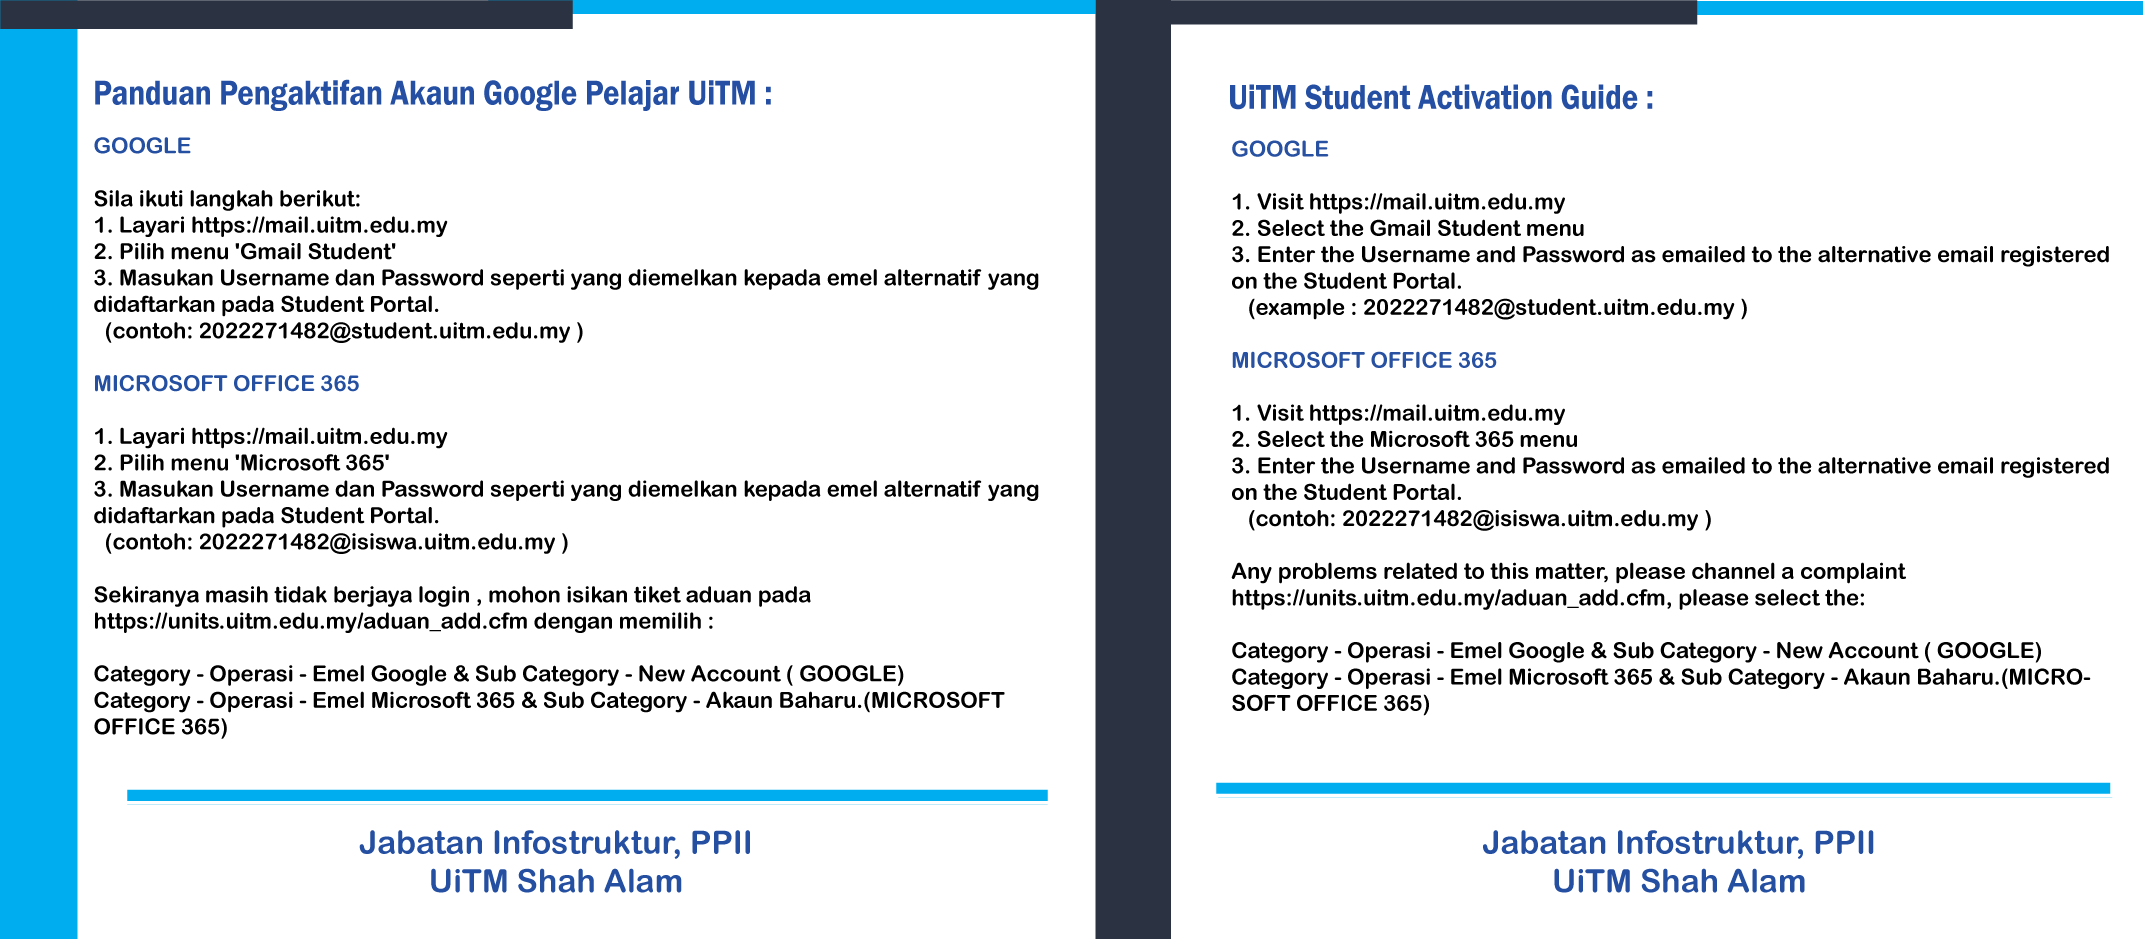 Activate your UiTM Student Google Account today!